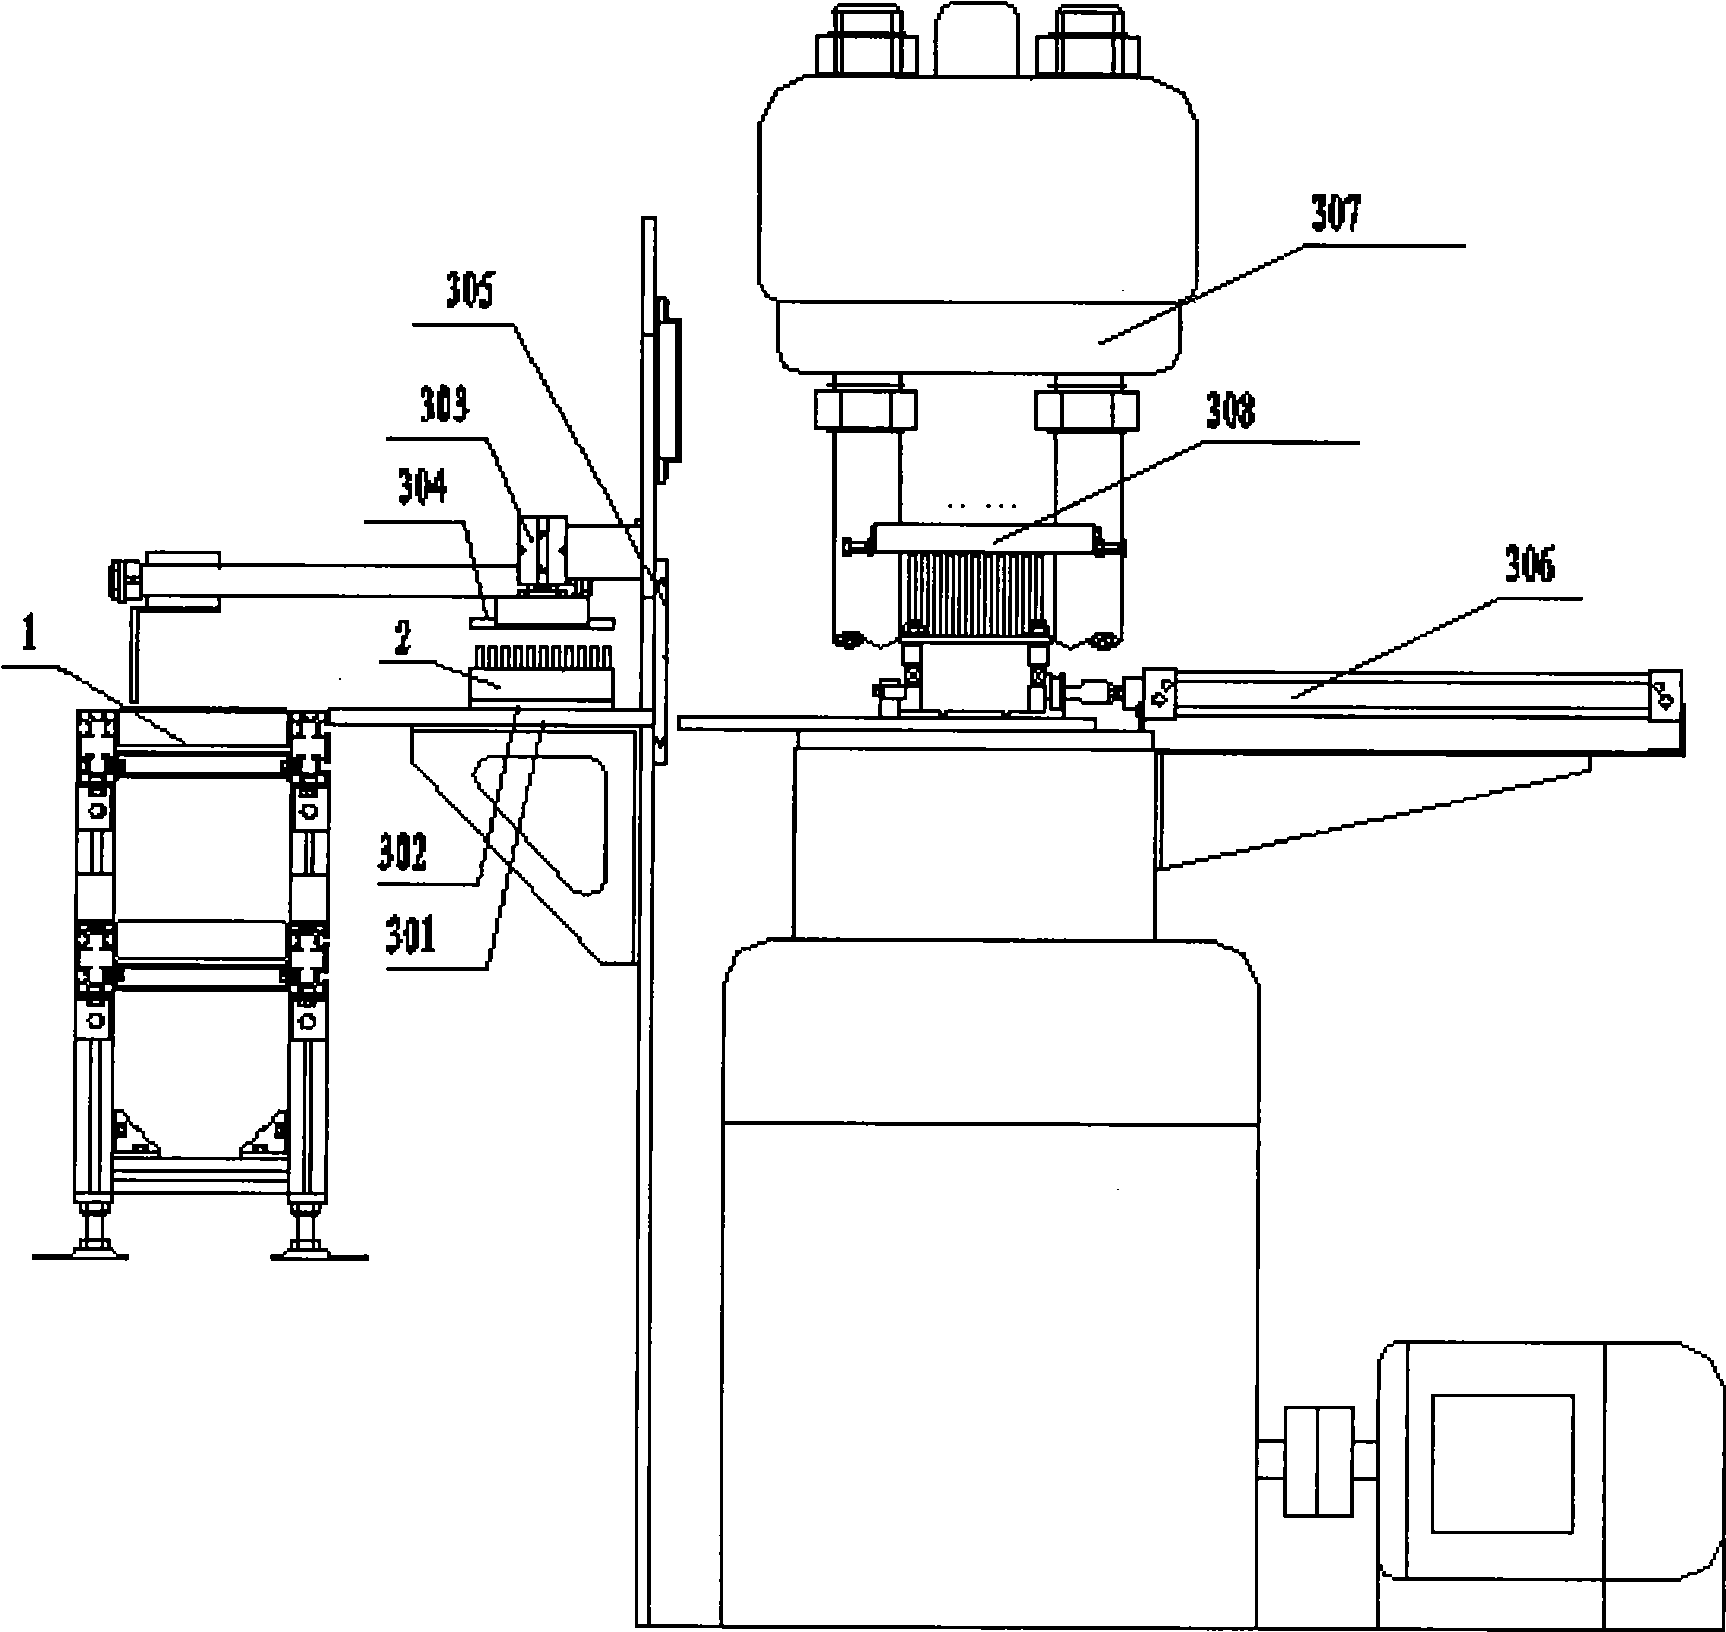 Production line for automatically assembling basal detonator